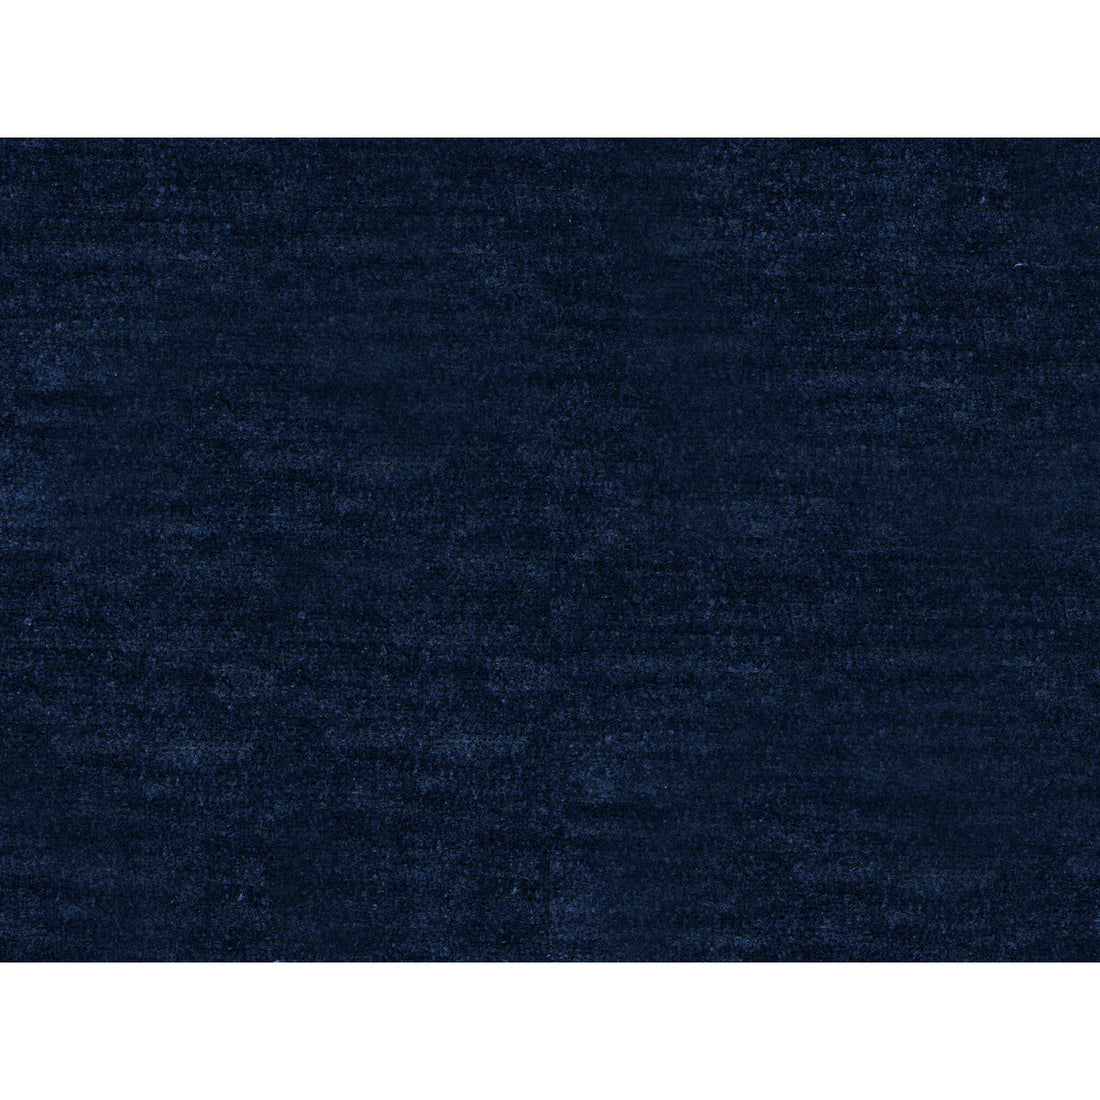 Kravet Smart fabric in 32975-50 color - pattern 32975.50.0 - by Kravet Smart